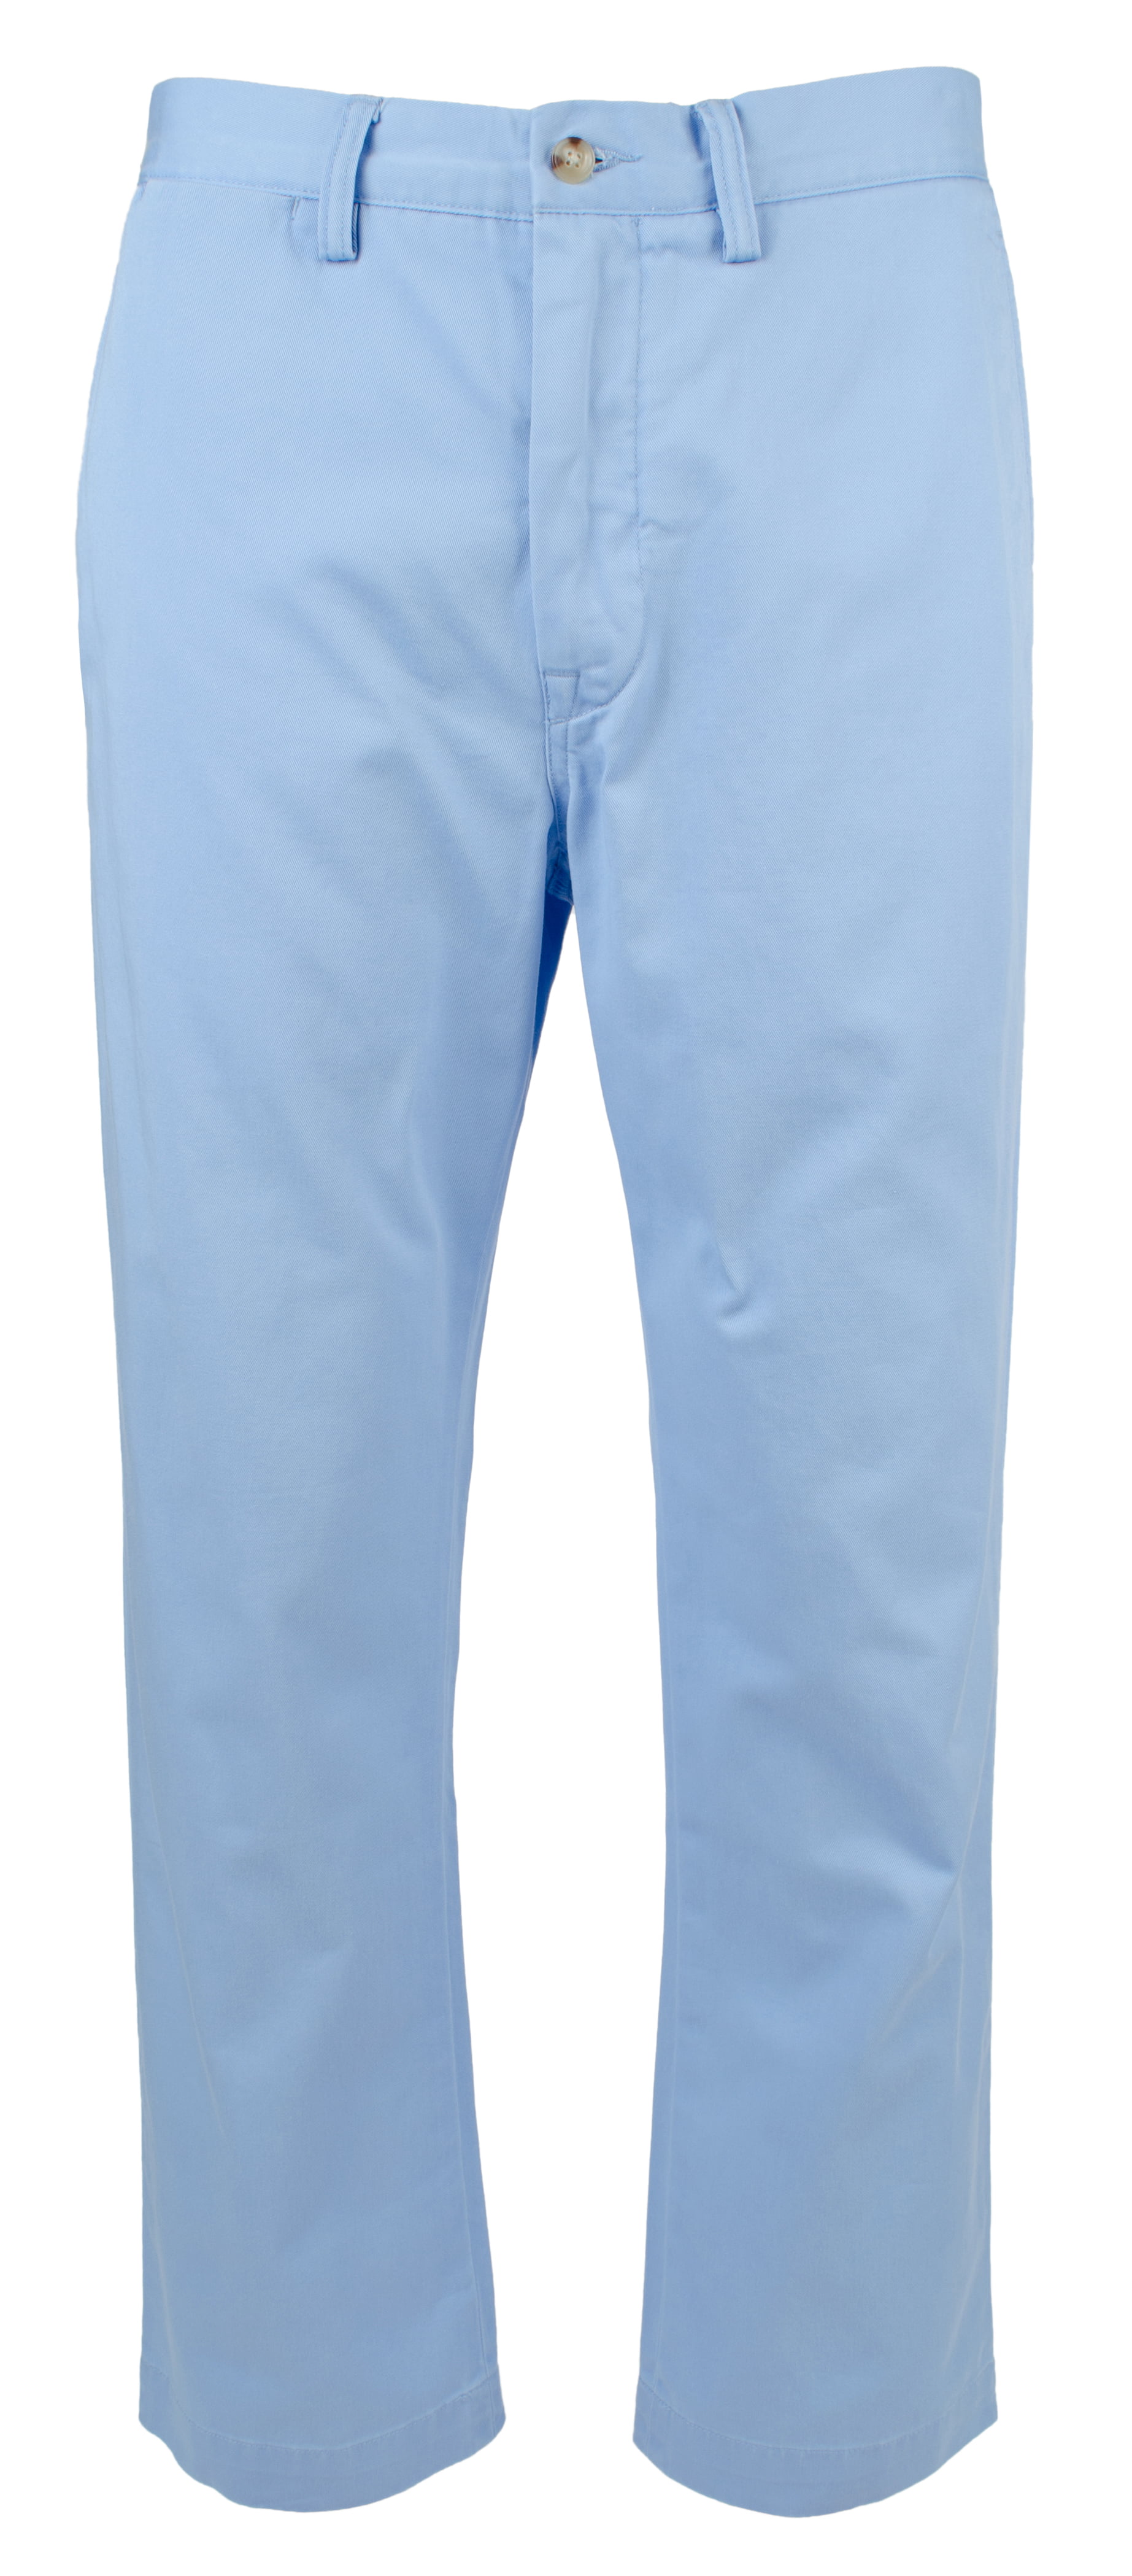 Mens Classic Fit Chino Pants-LB-32WX30L Light Blue